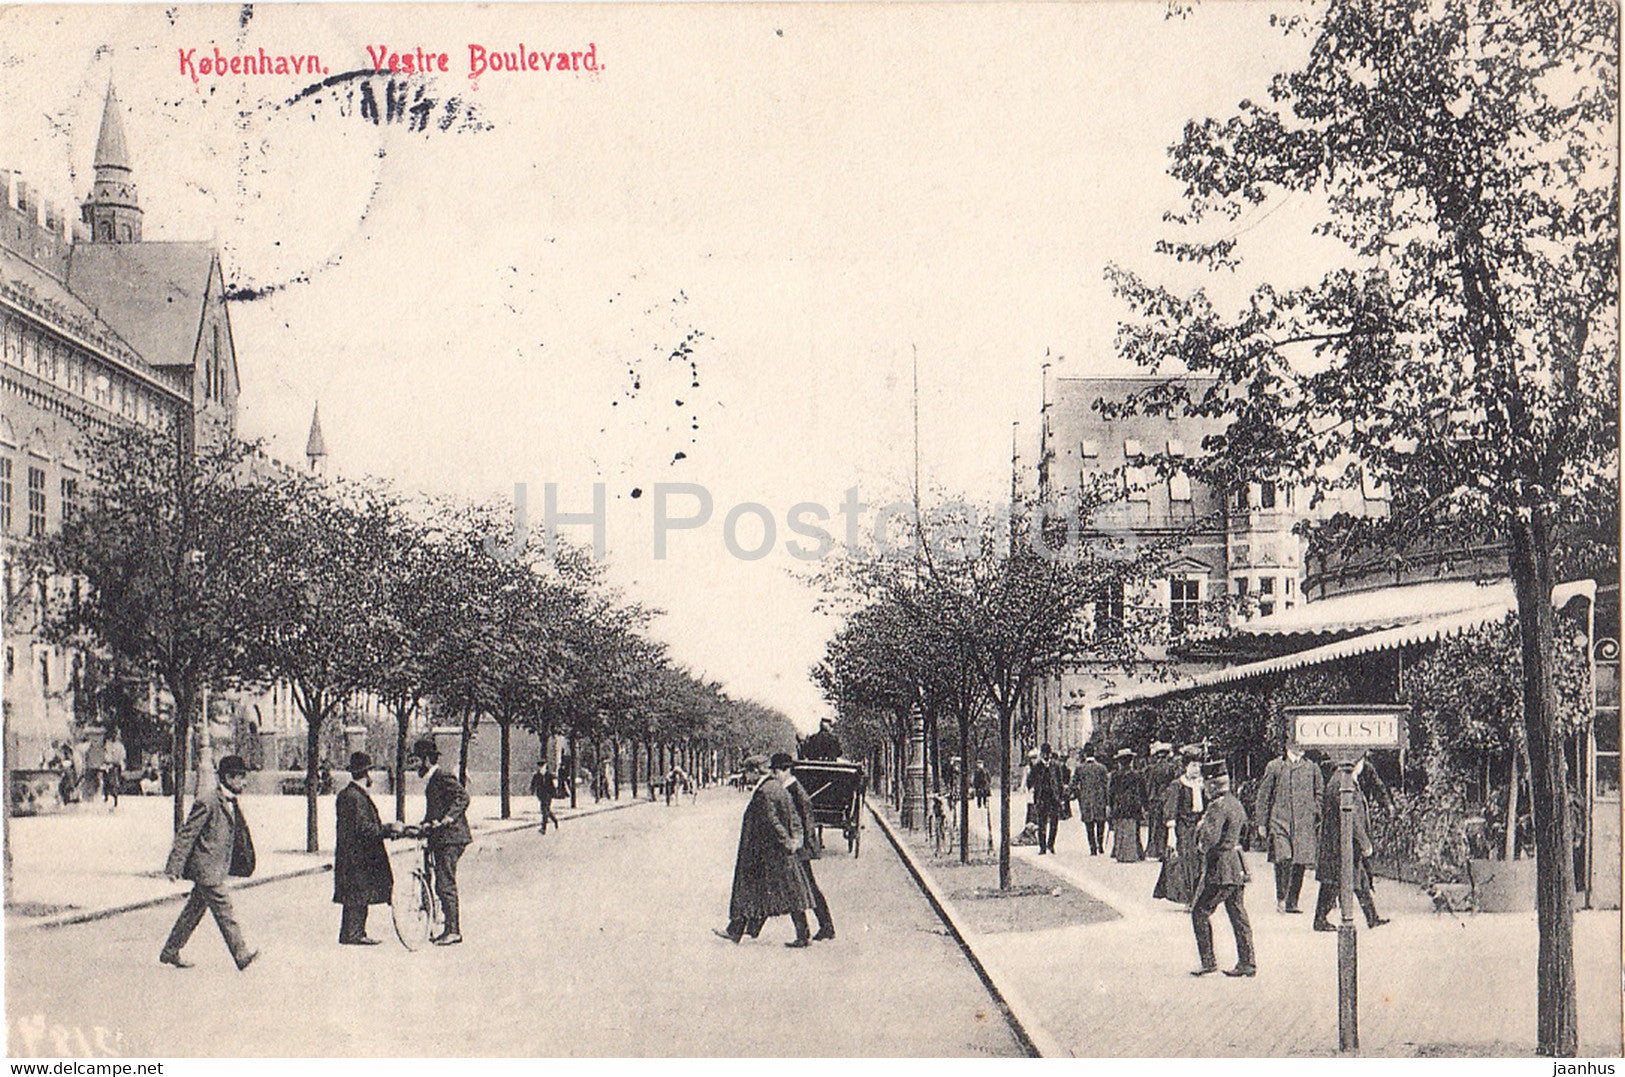 Kobenhavn - Copenhagen - Vestre Boulevard - old postcard - Denmark - used - JH Postcards